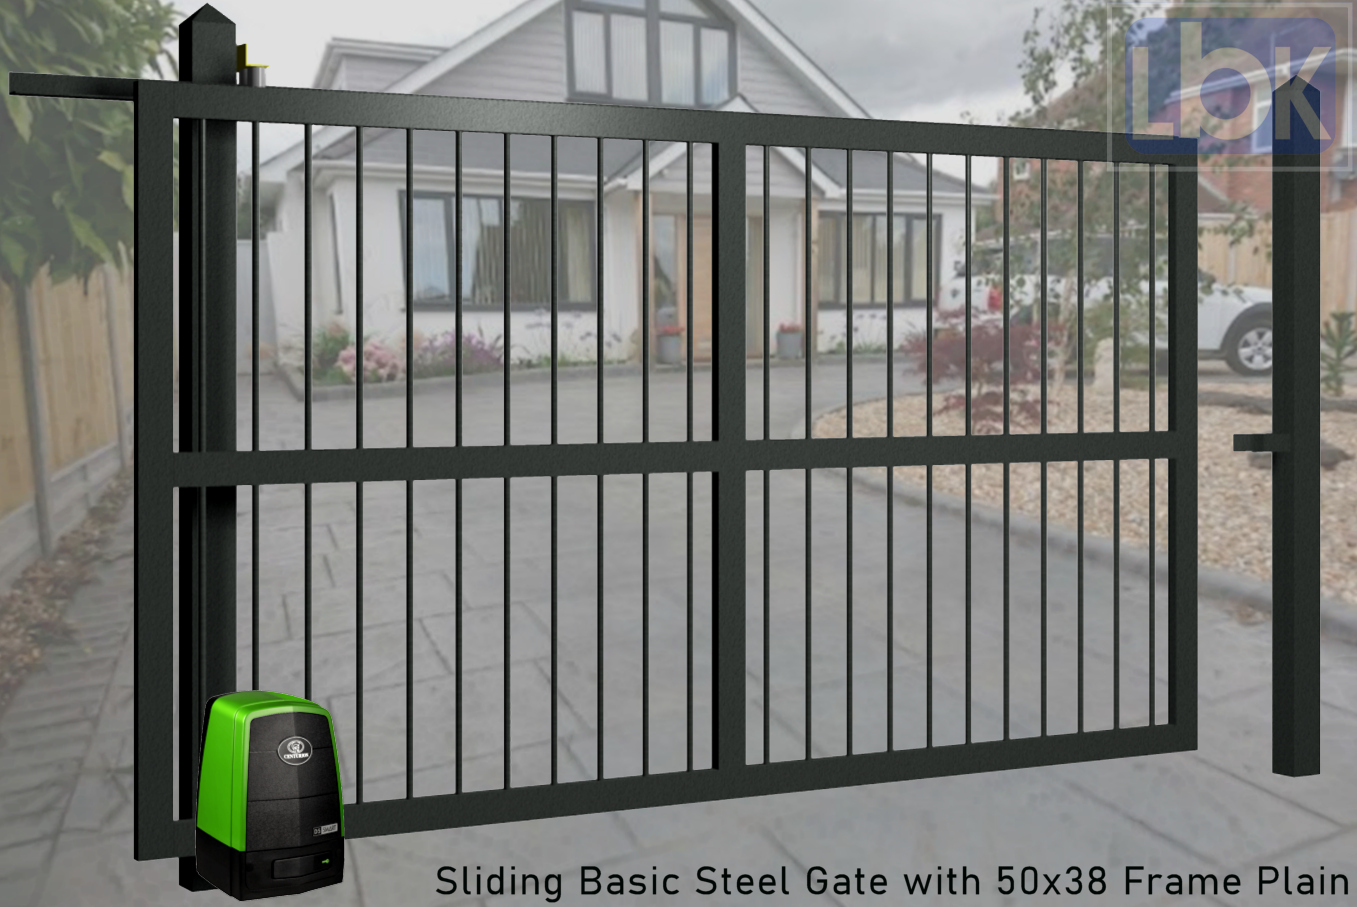 01a Sliding Basic Steel Gate with 50×38 Frame Plain